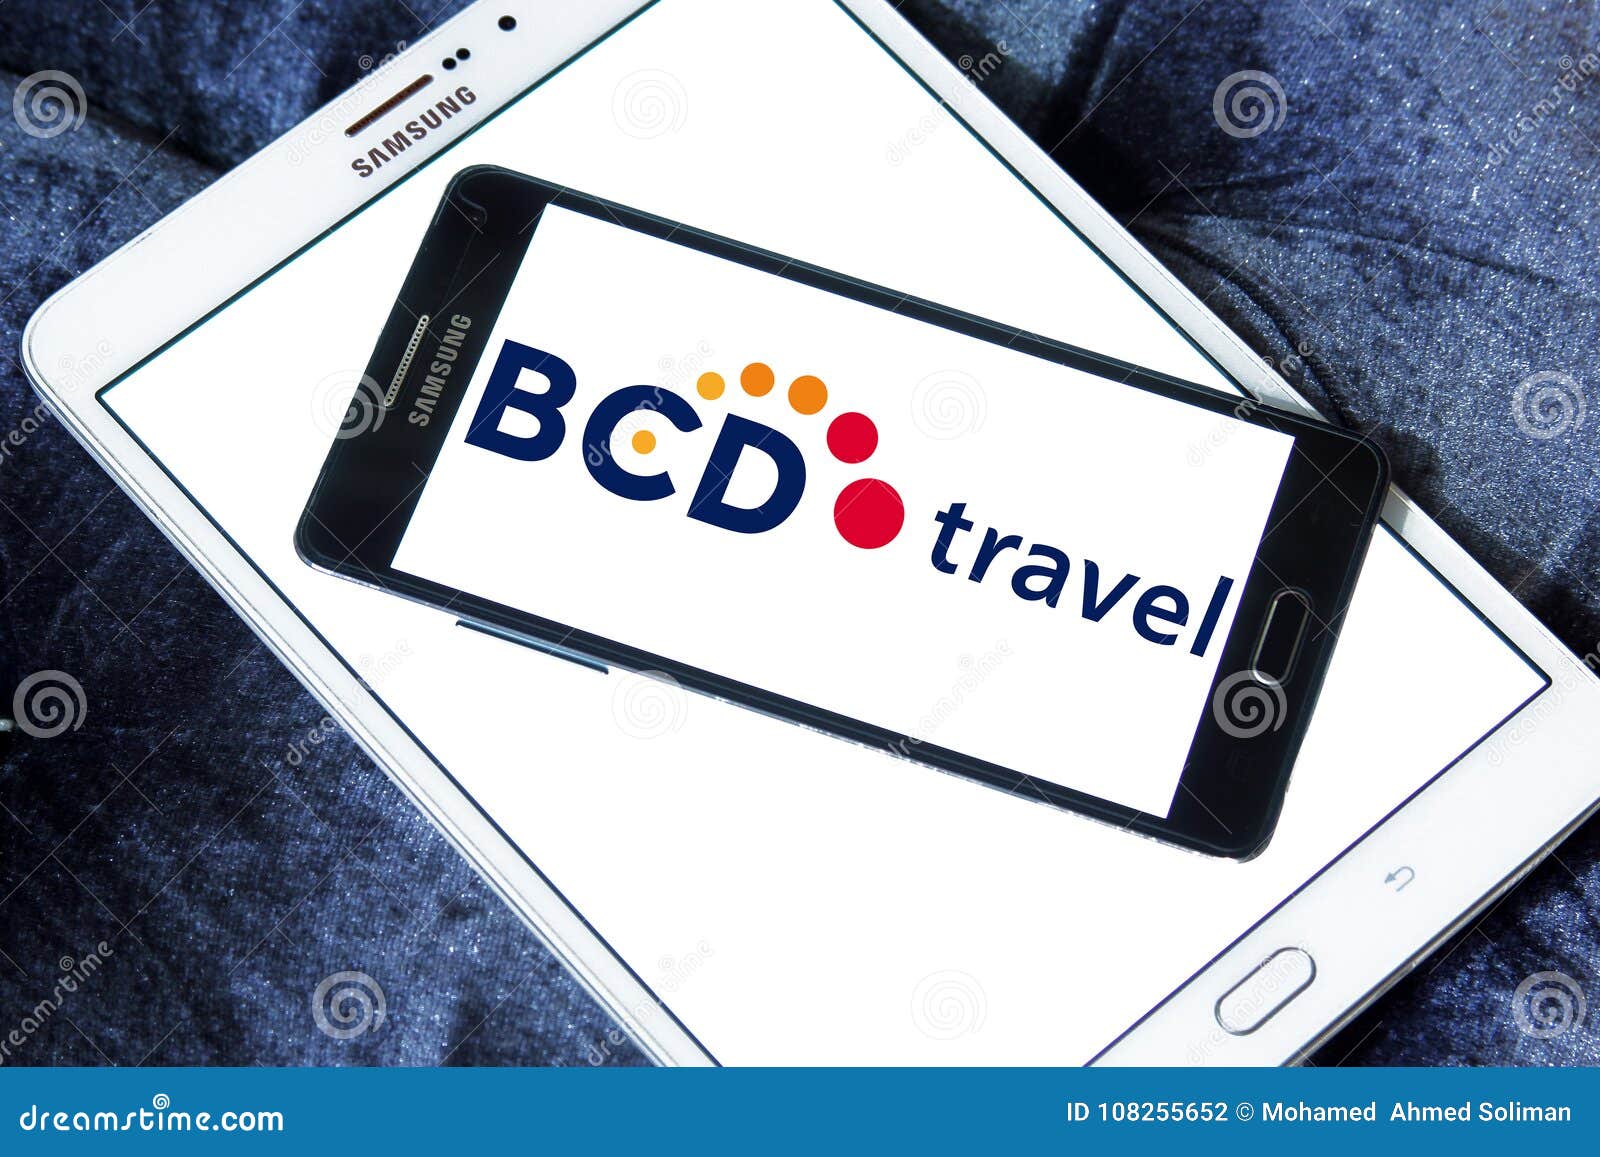 bcd travel india phone